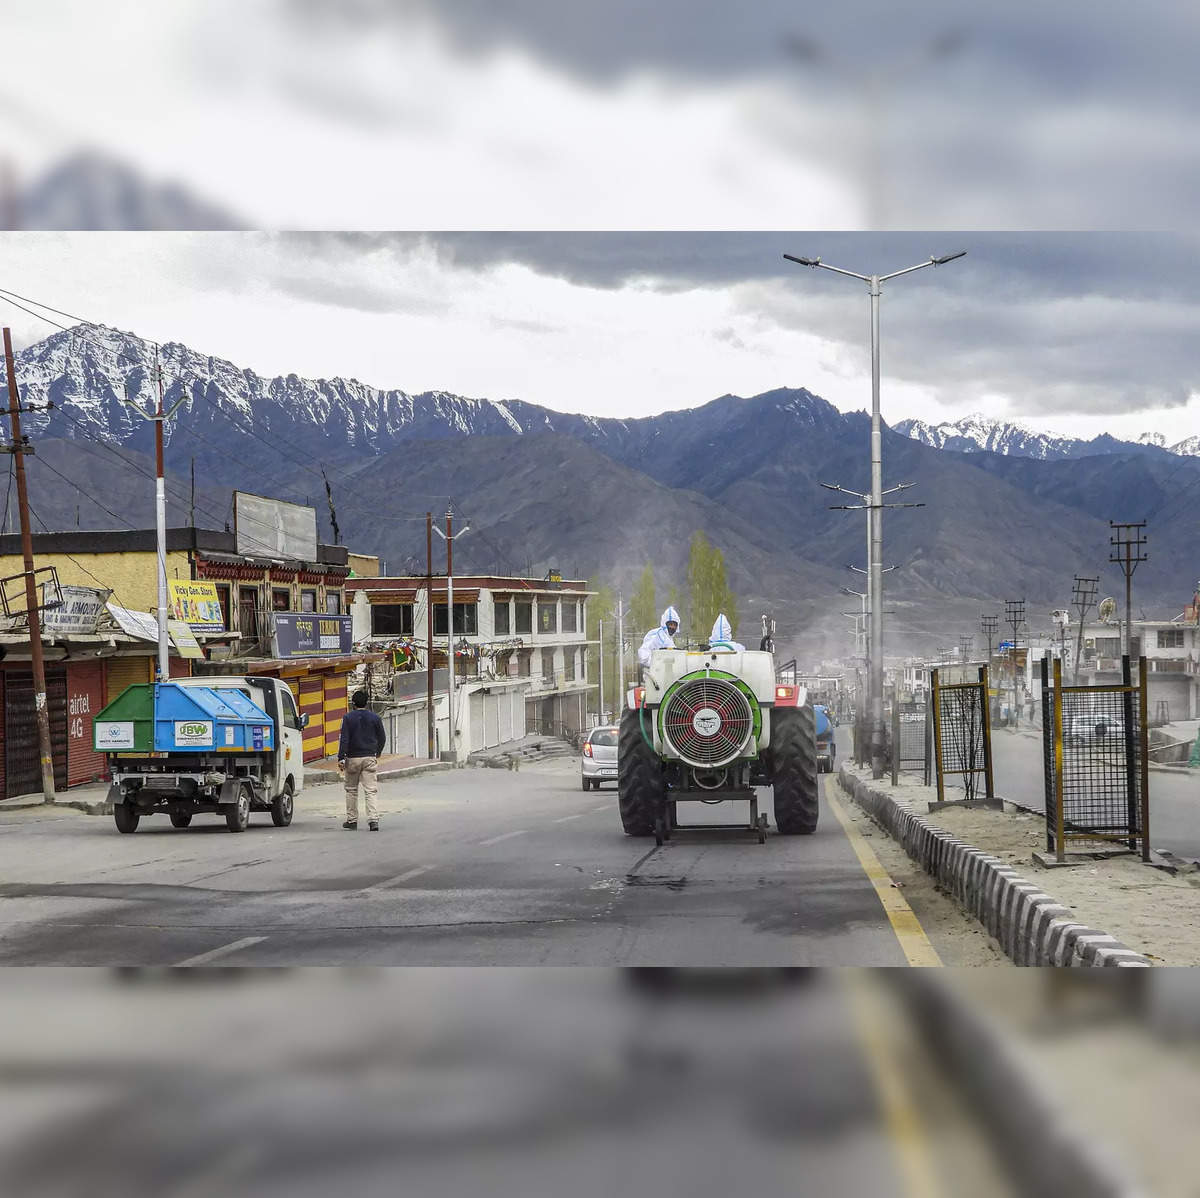 Nubra valley tour • Leh-Ladakh Taxi Driver